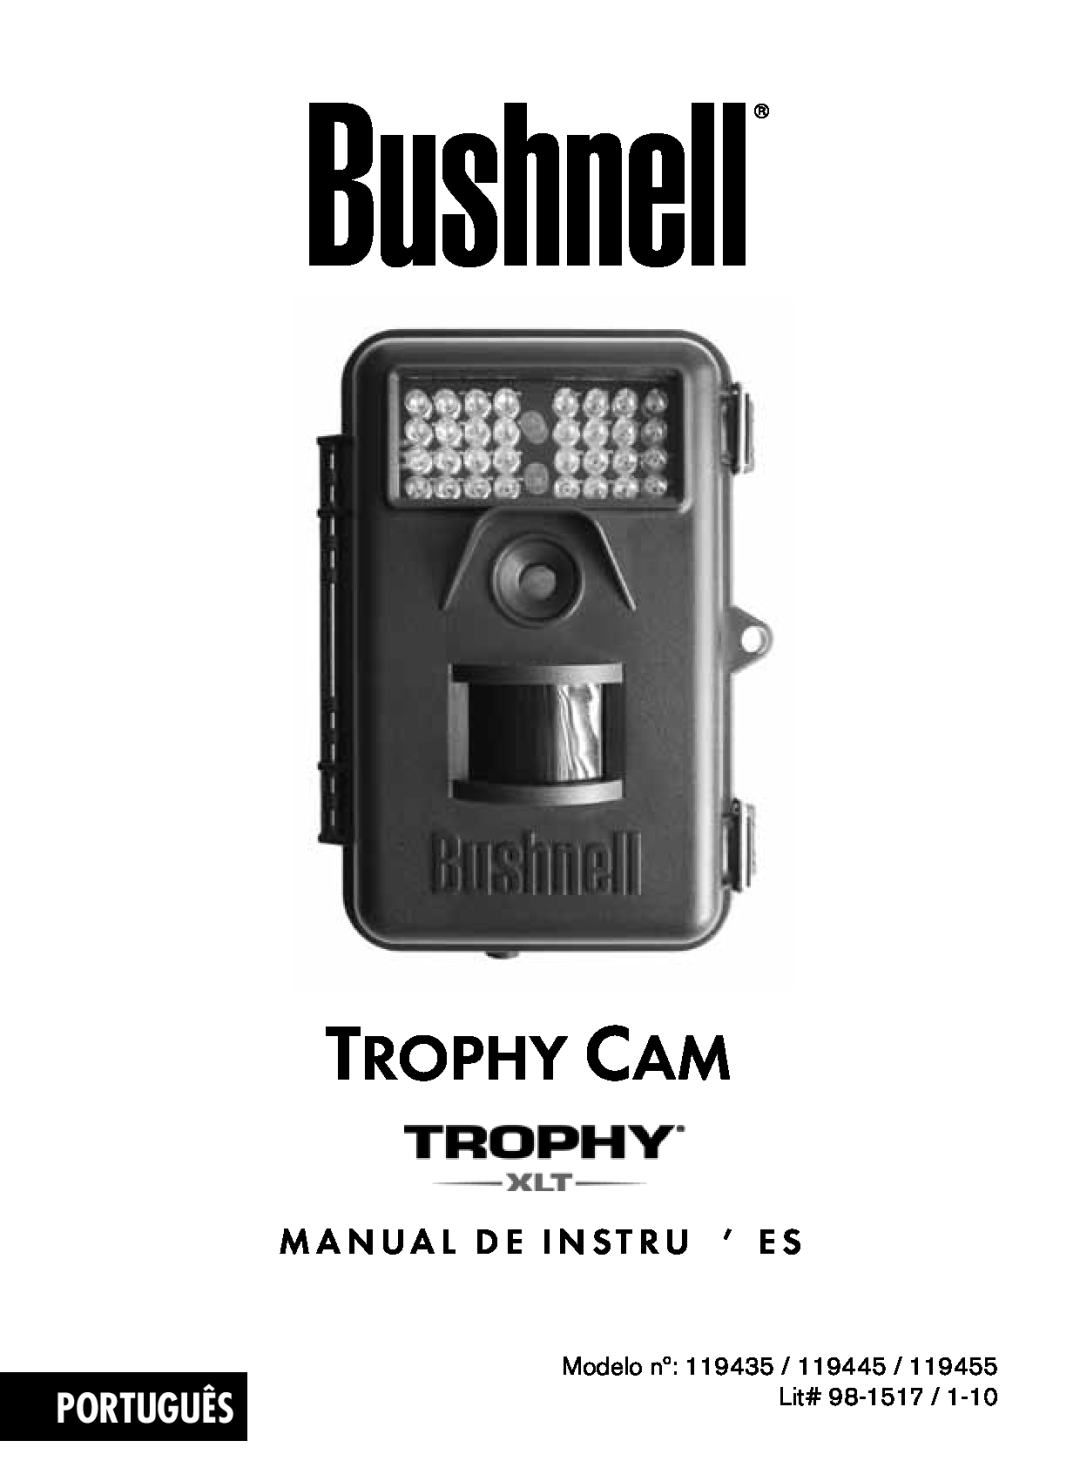 Bushnell 119435, 119455, 119445 instruction manual M A N U A L D E I N S T R U Ç Õ E S, Português, Trophy Cam 